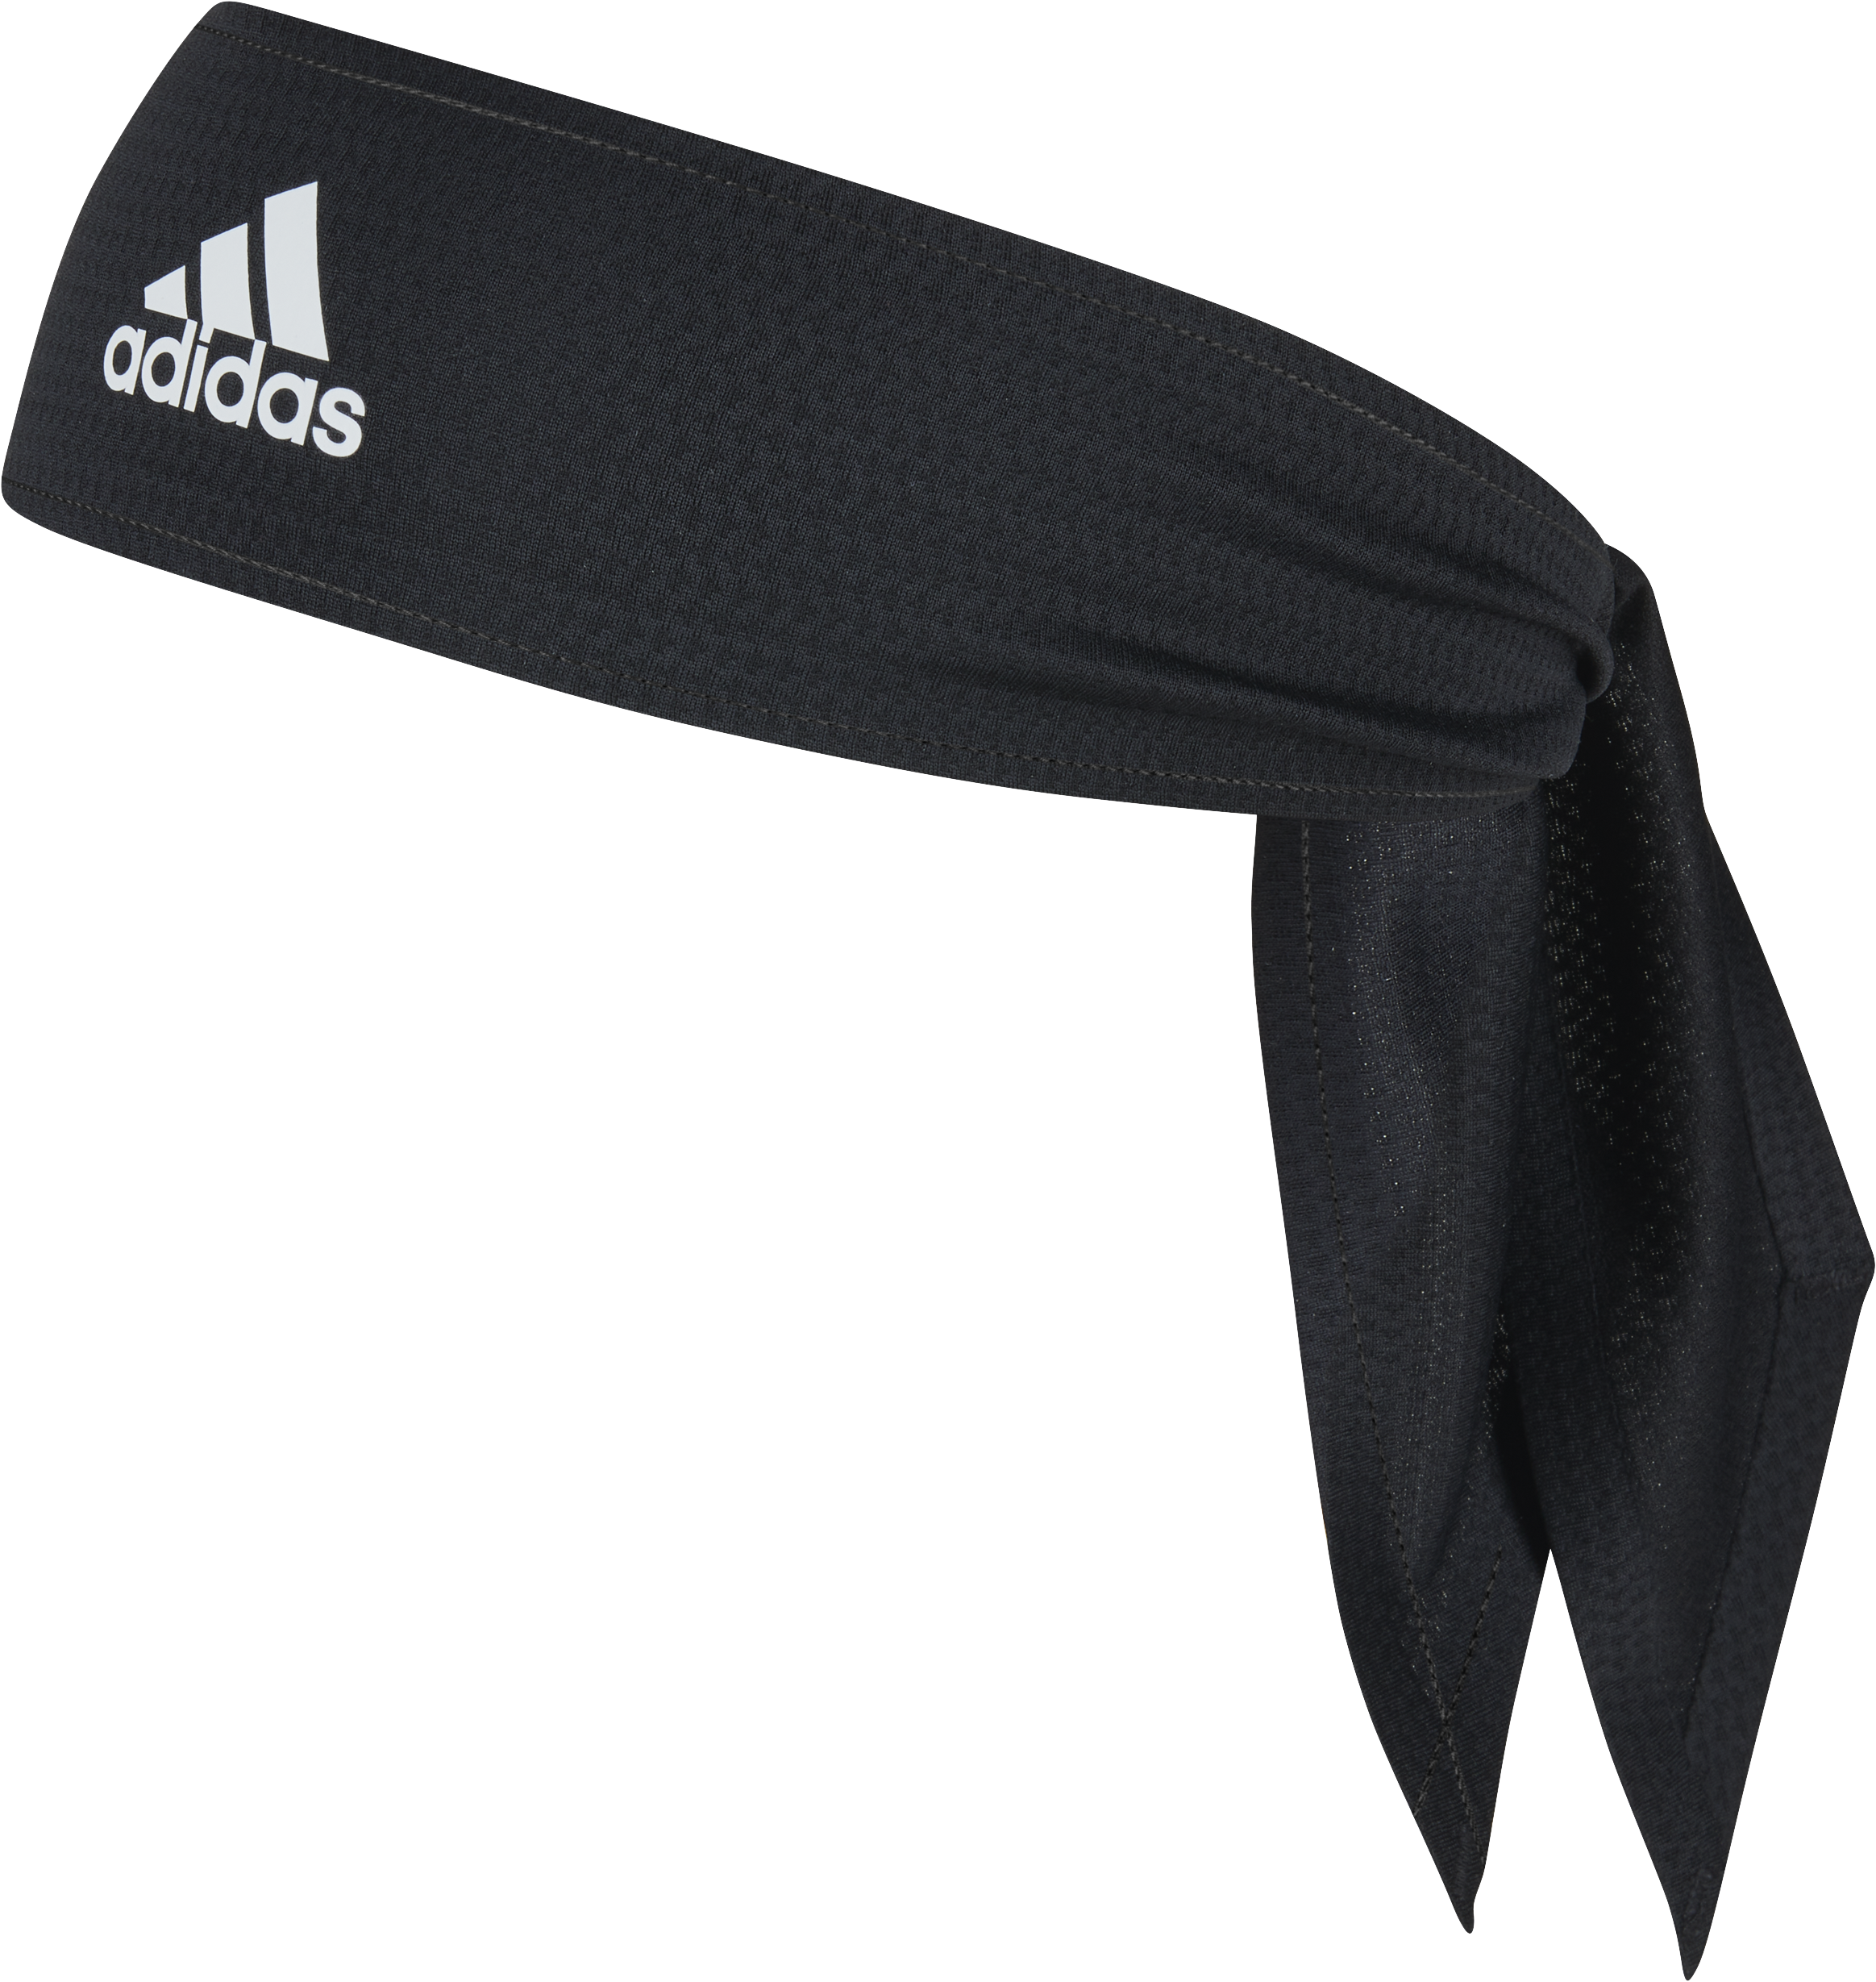 Adidas Aeroready Tieband (Sort)